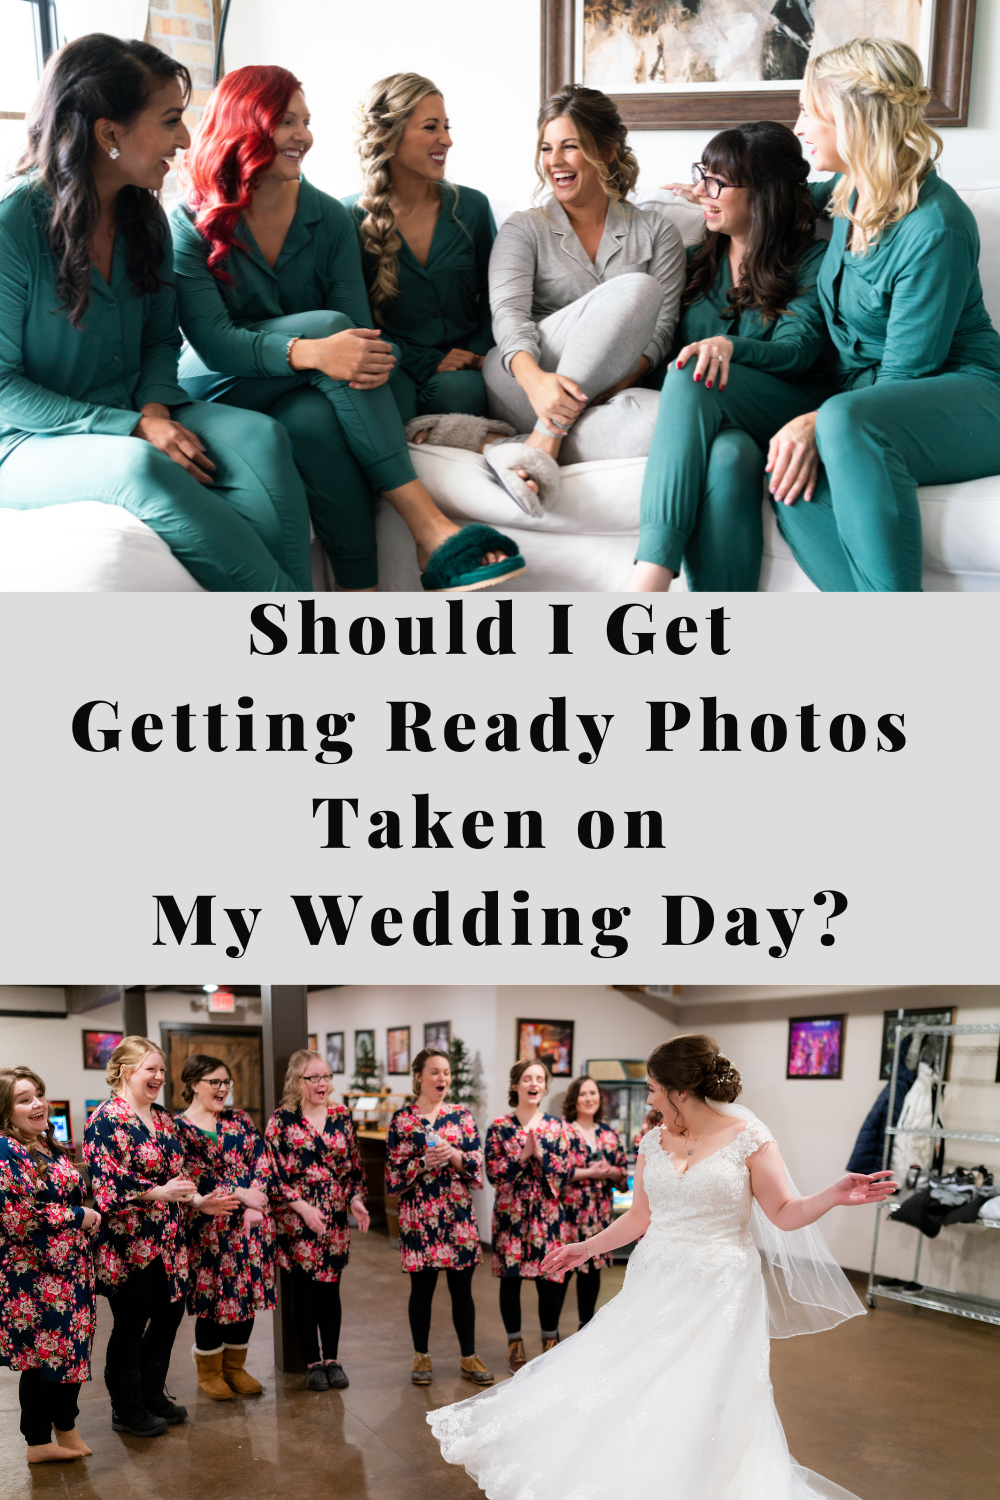 Should I Get Getting Ready Photos on My Wedding Day?